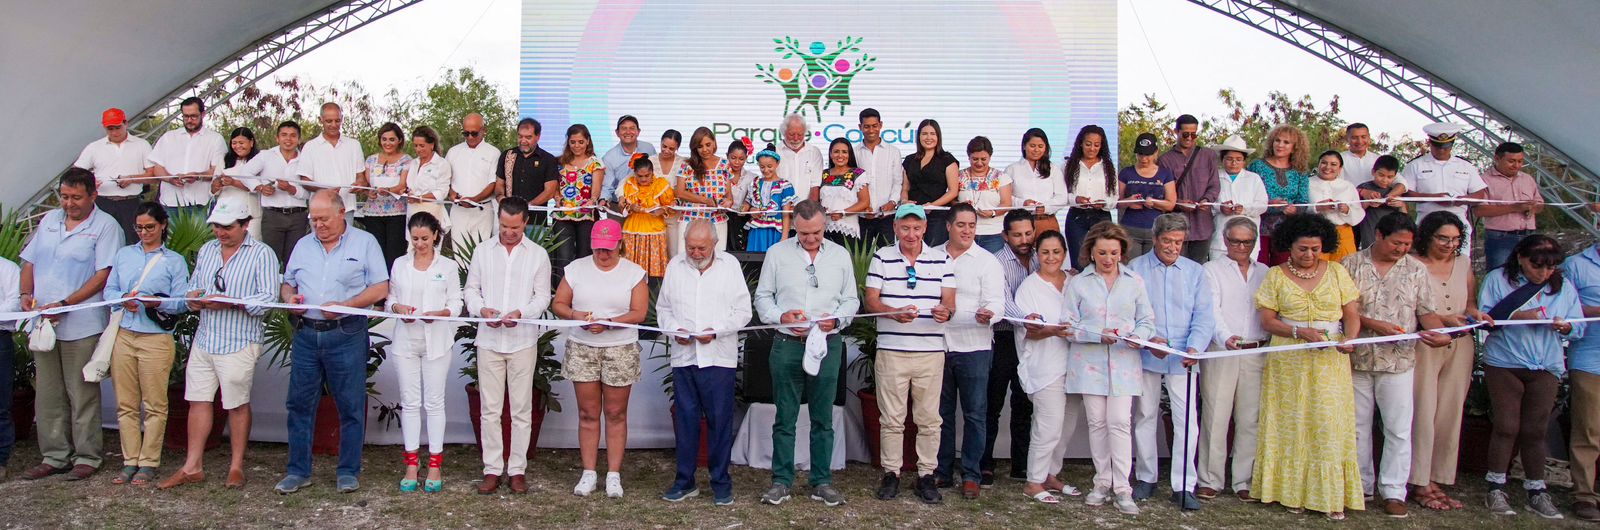 Mara Lezama inaugura la primera etapa del Parque Cancún